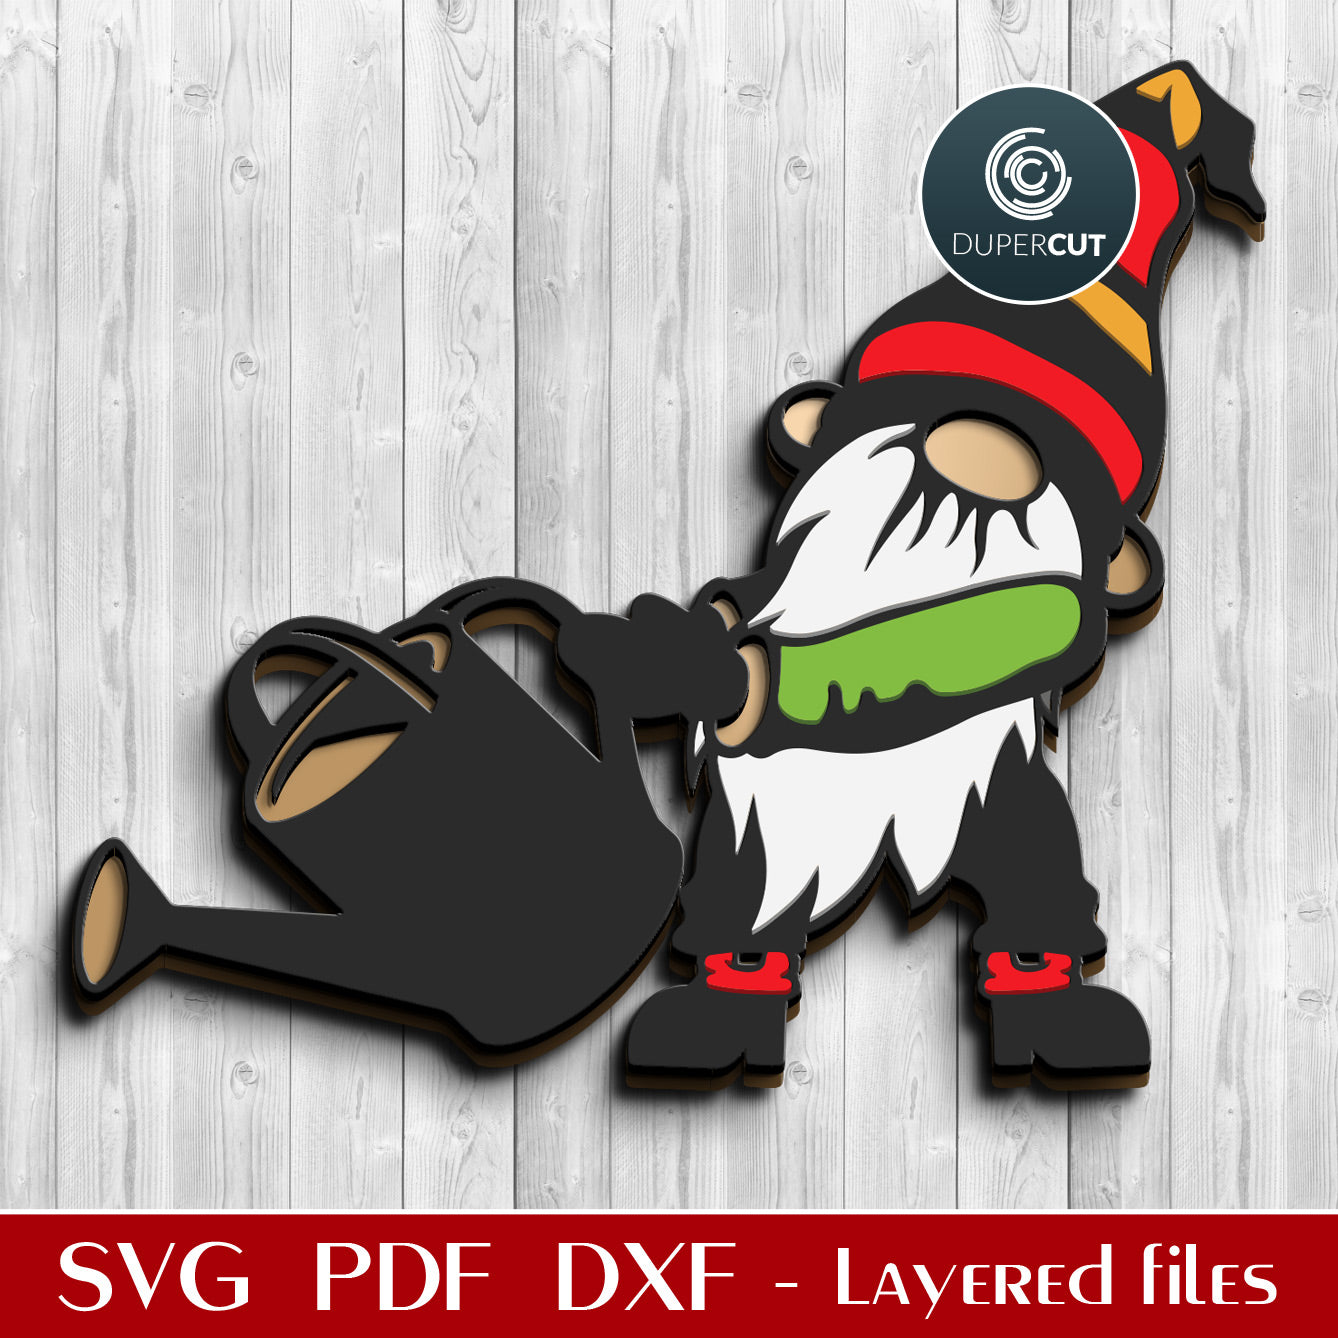 Garden gnome layered yard decor - SVG DXF vector cutting files for Glowforge, Cricut, Silhouette Cameo, CNC plasma machines, scroll saw pattern by www.DuperCut.com